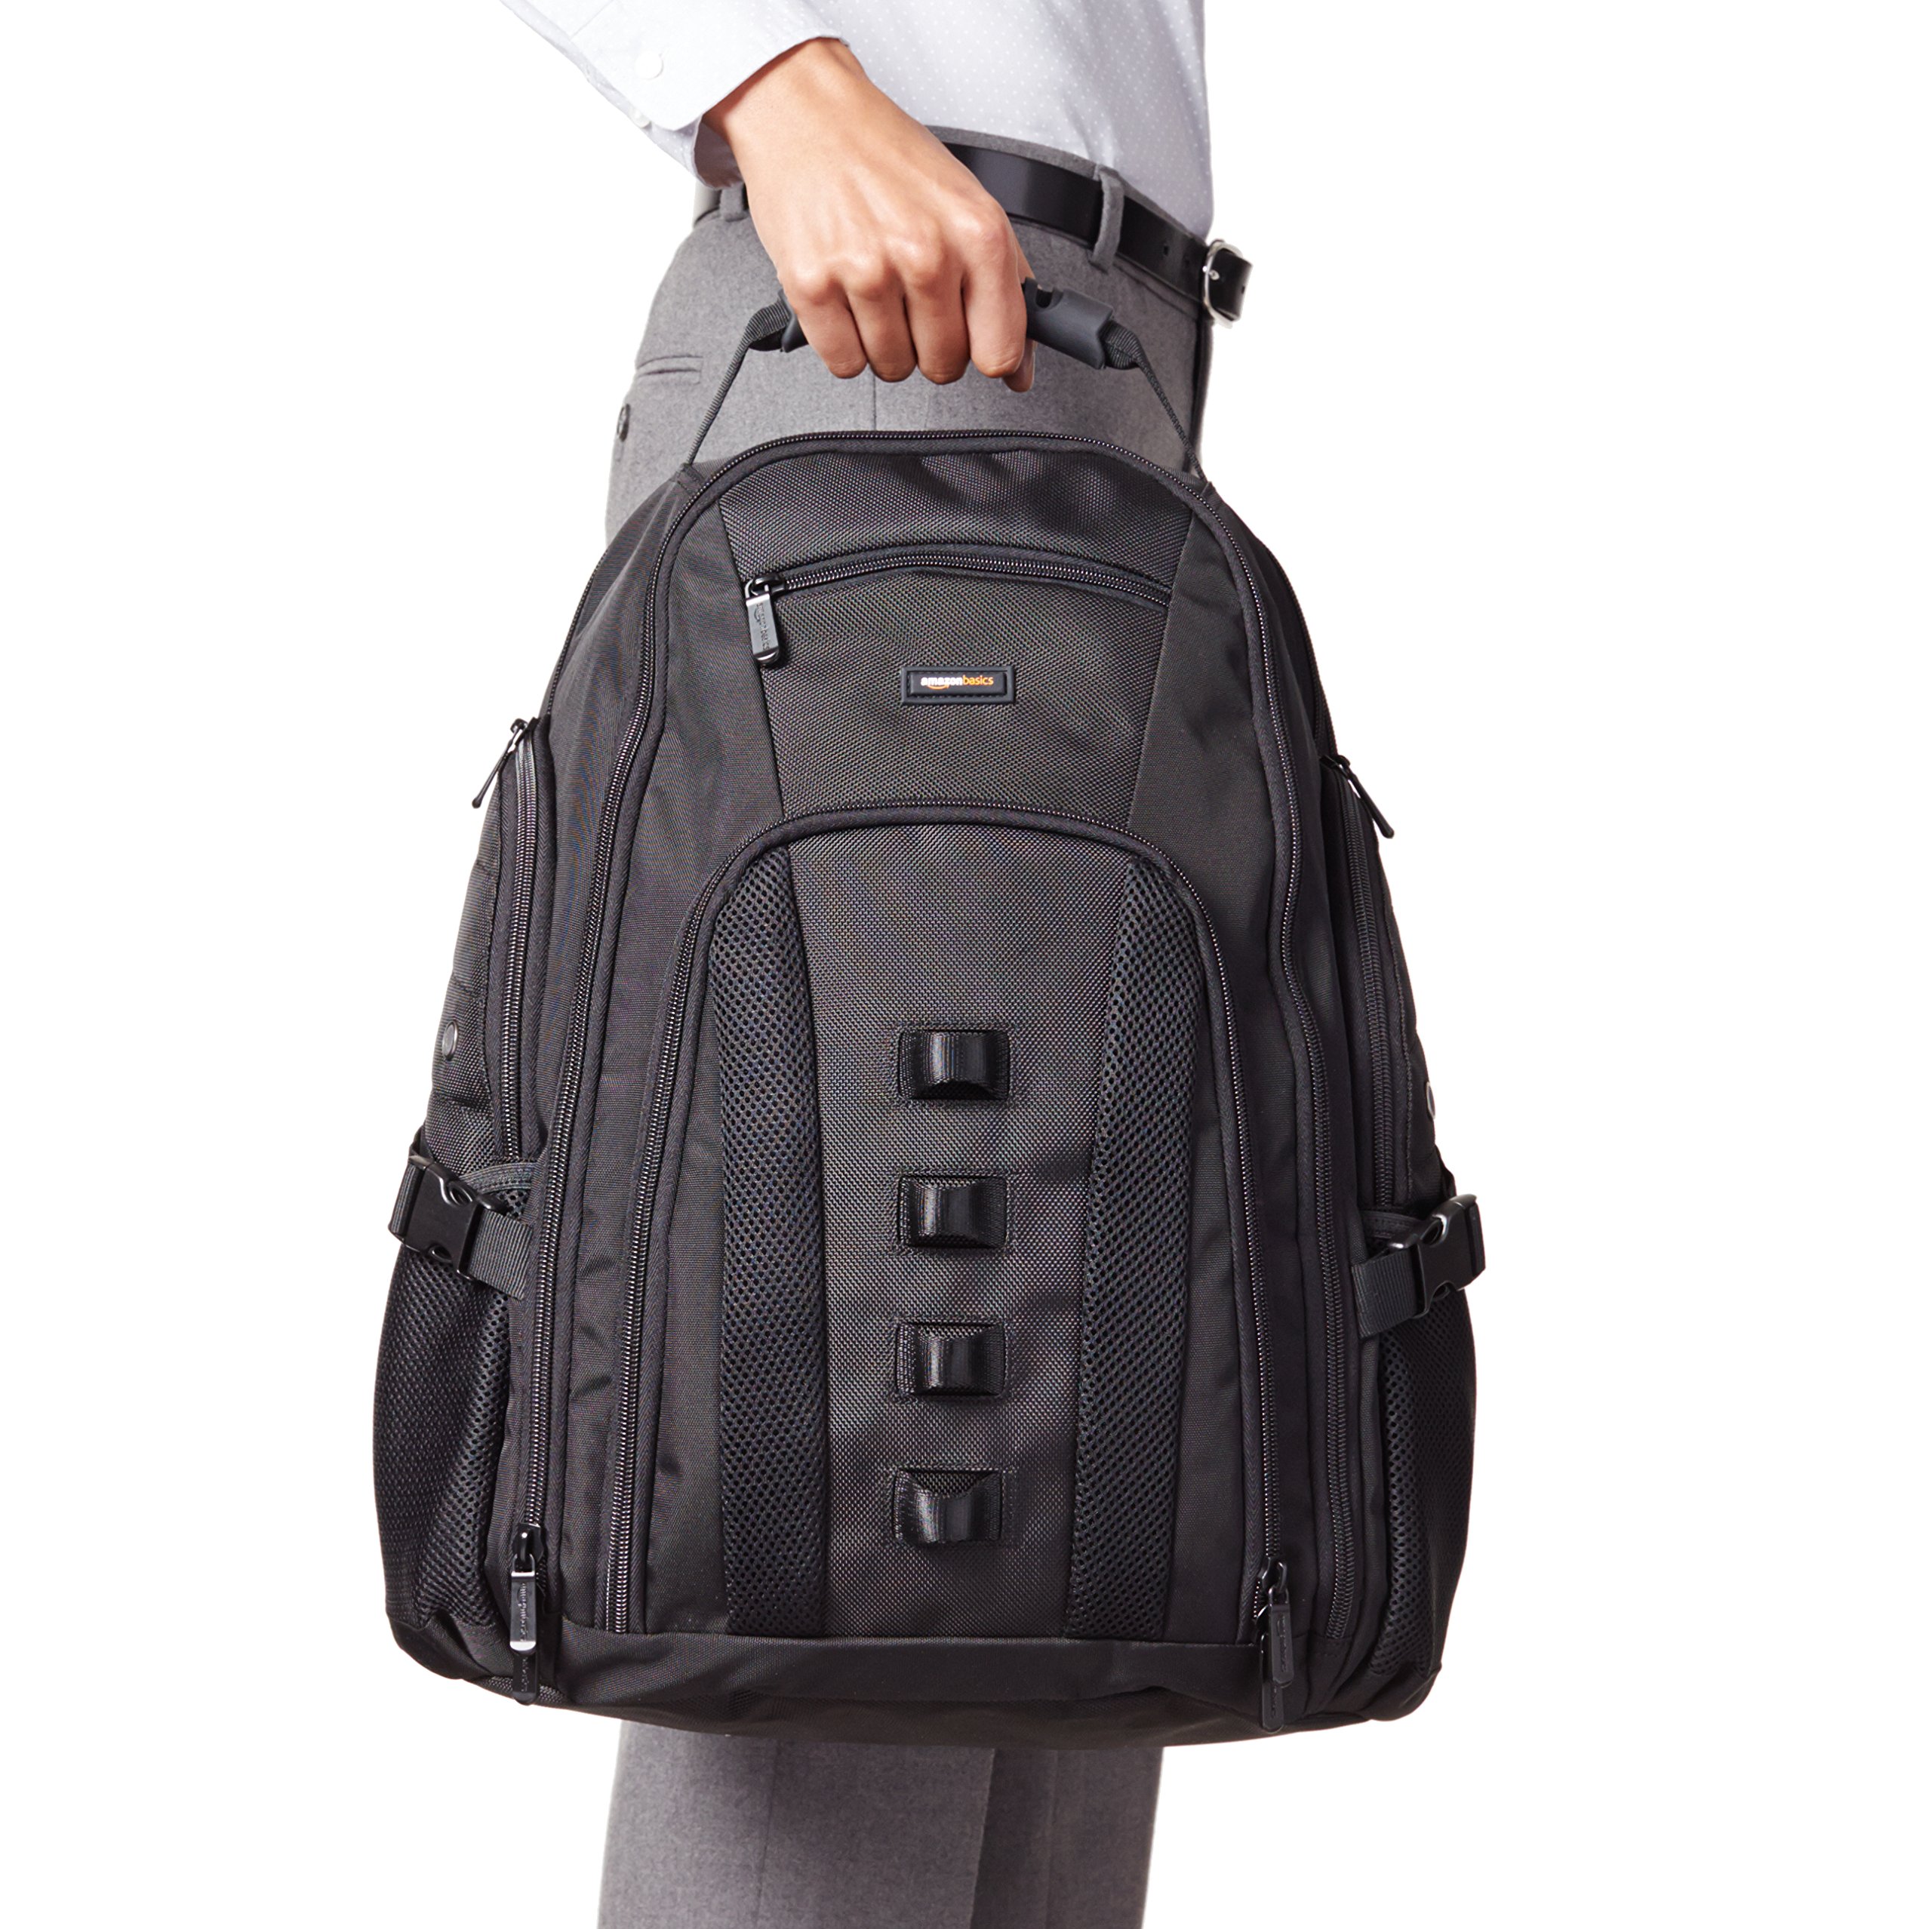 Amazon Basics Adventure Laptop Backpack - Fits Up to 17-Inch Laptops